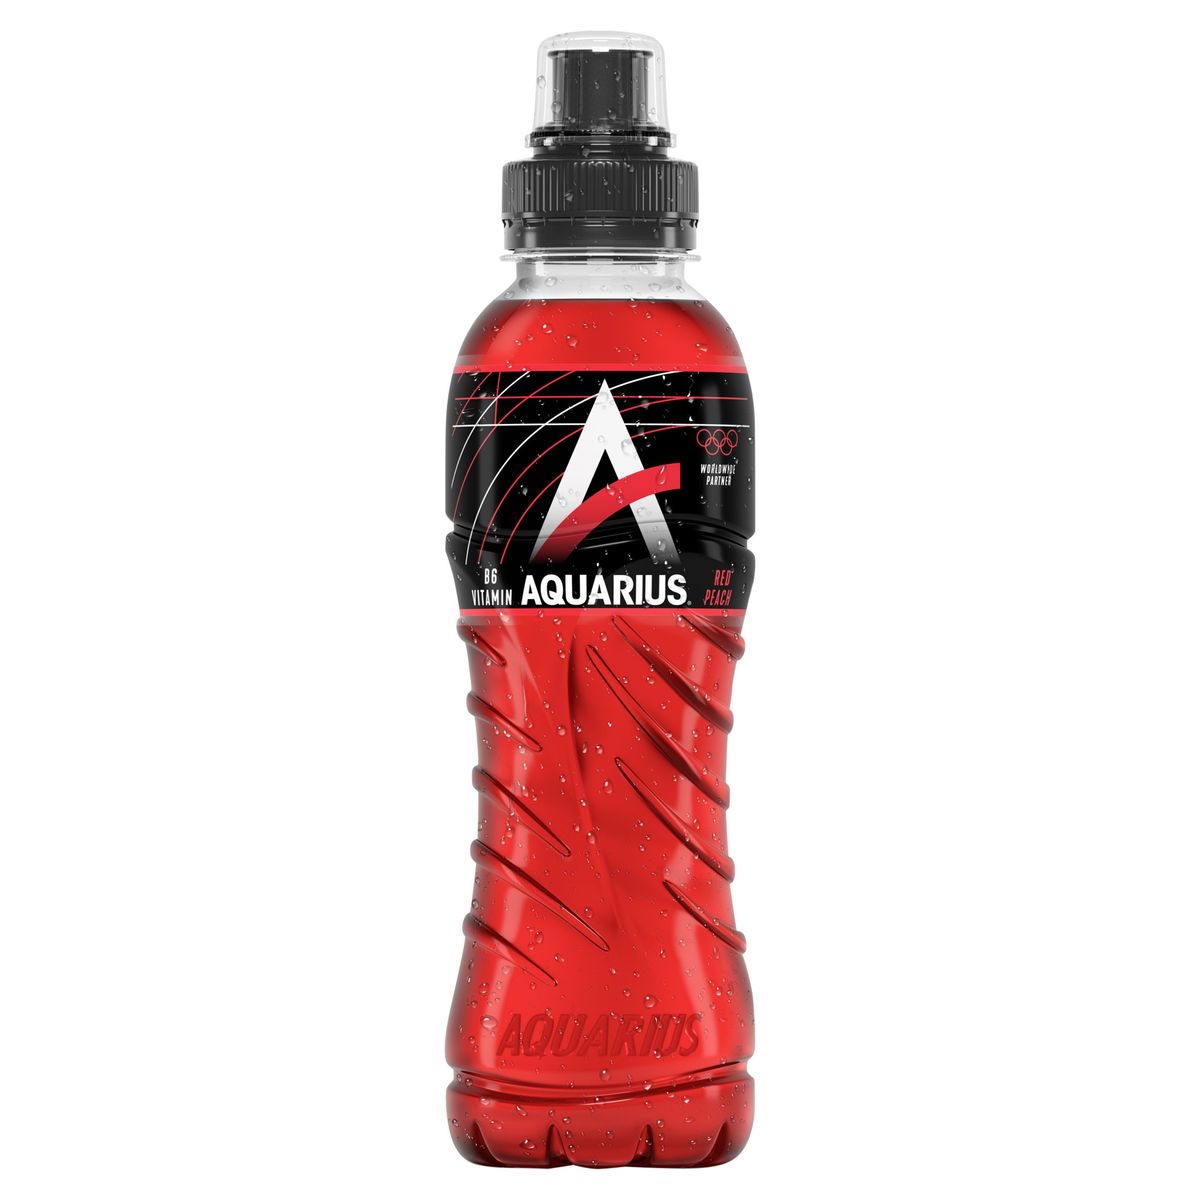 Aquarius Hydration Red Peach 500 ml